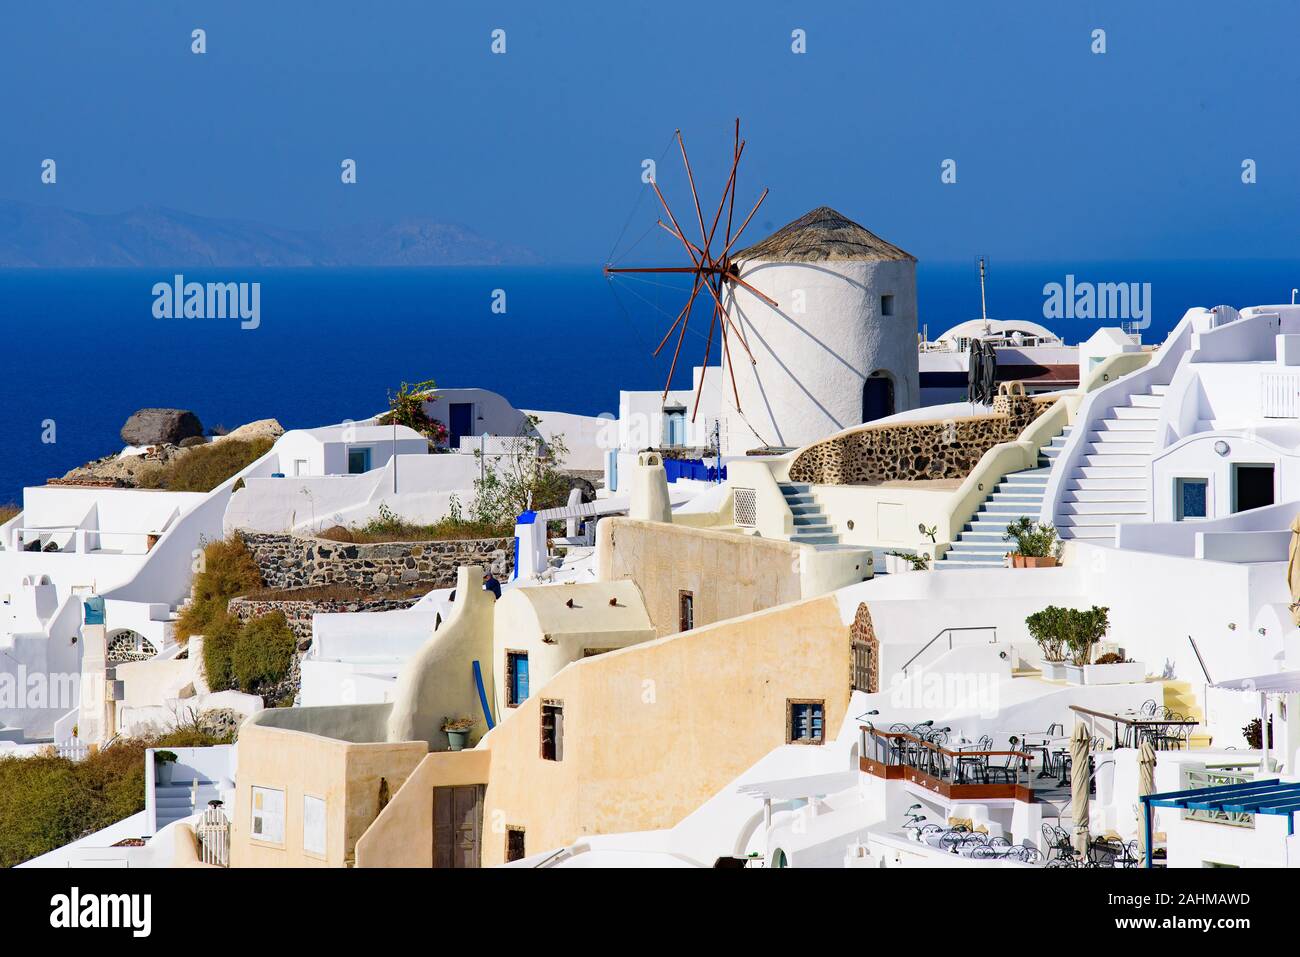 Windmill and traditional white buildings facing Mediterranean Sea in Oia, Santorini, Greece Stock Photo